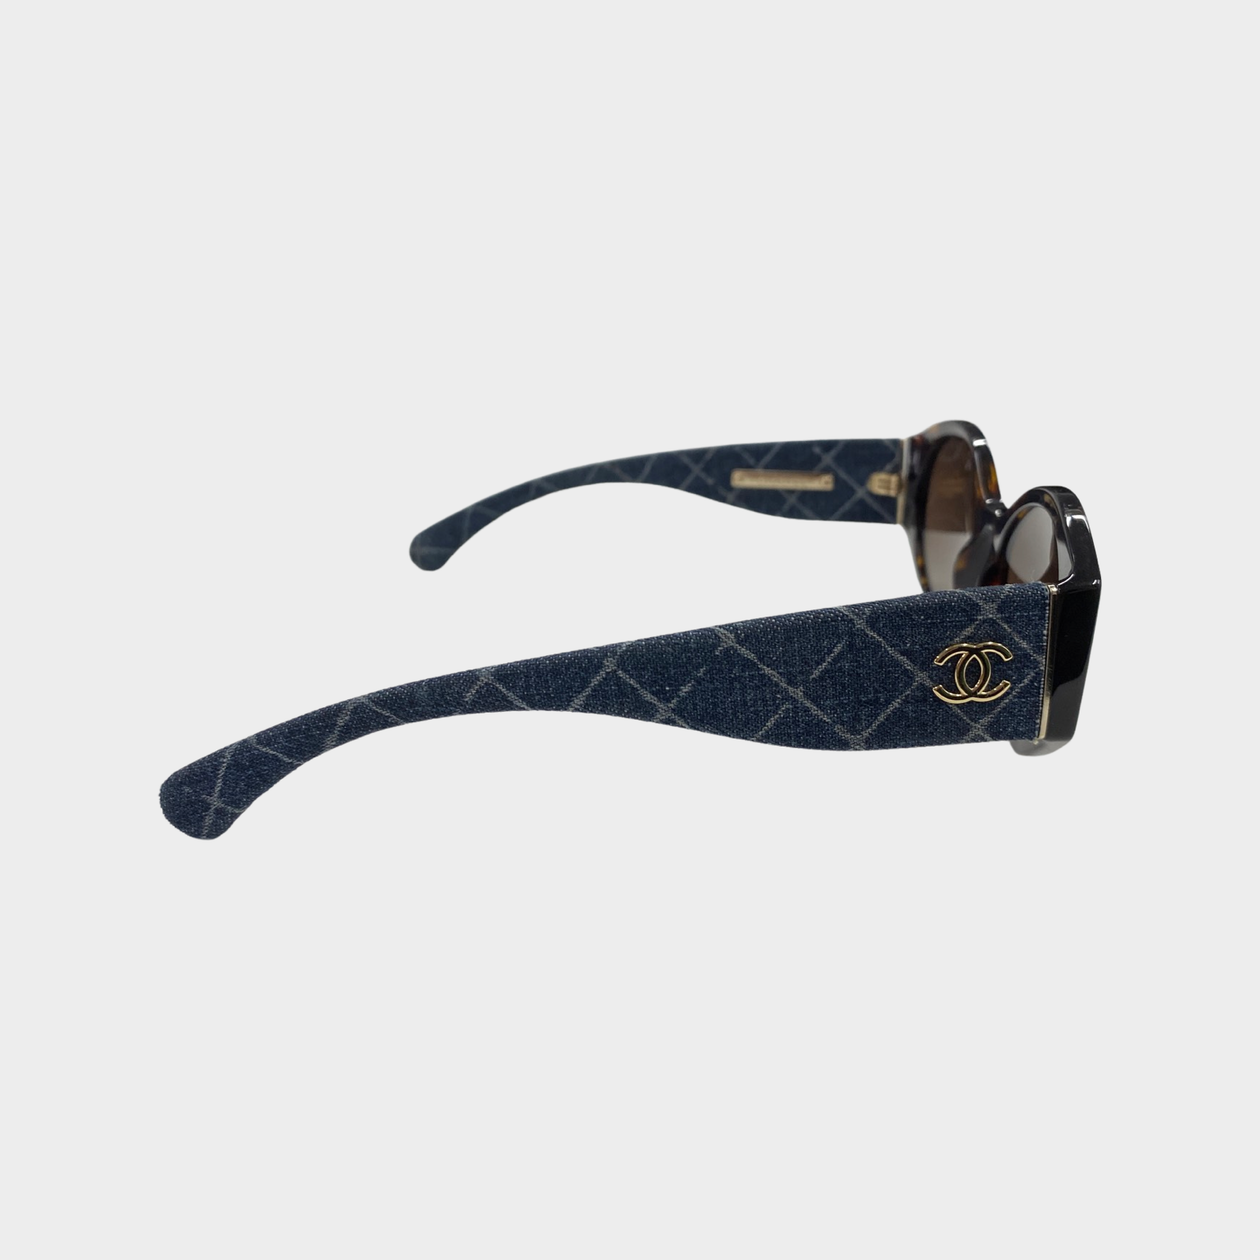 Chanel women's CC denim and tortoise shell sunglasses – Loop